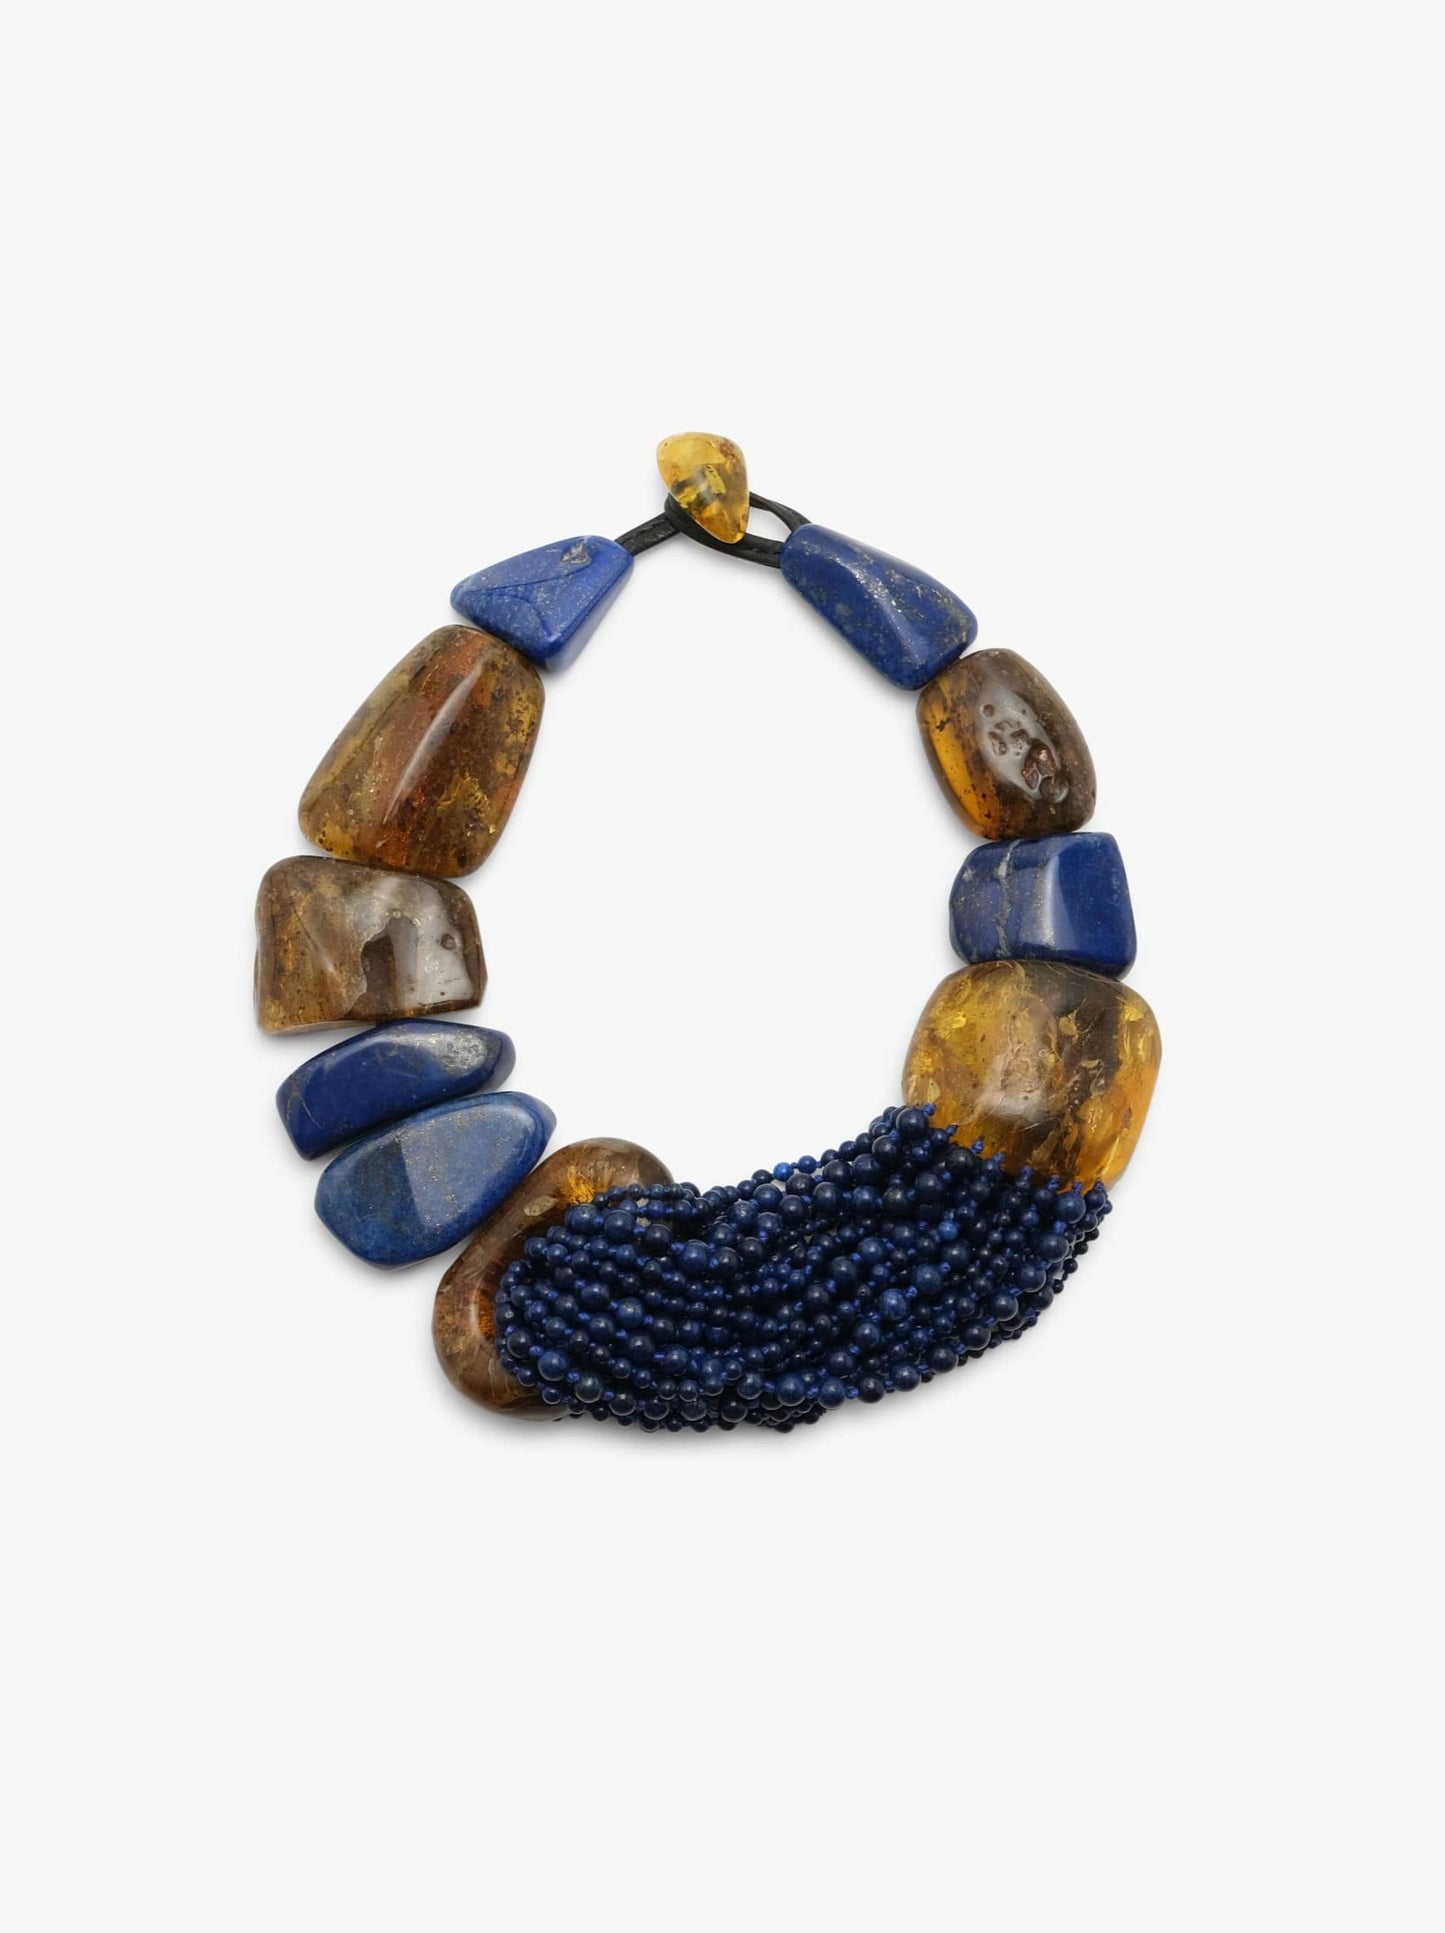 Necklace: lapis lazuli, amber